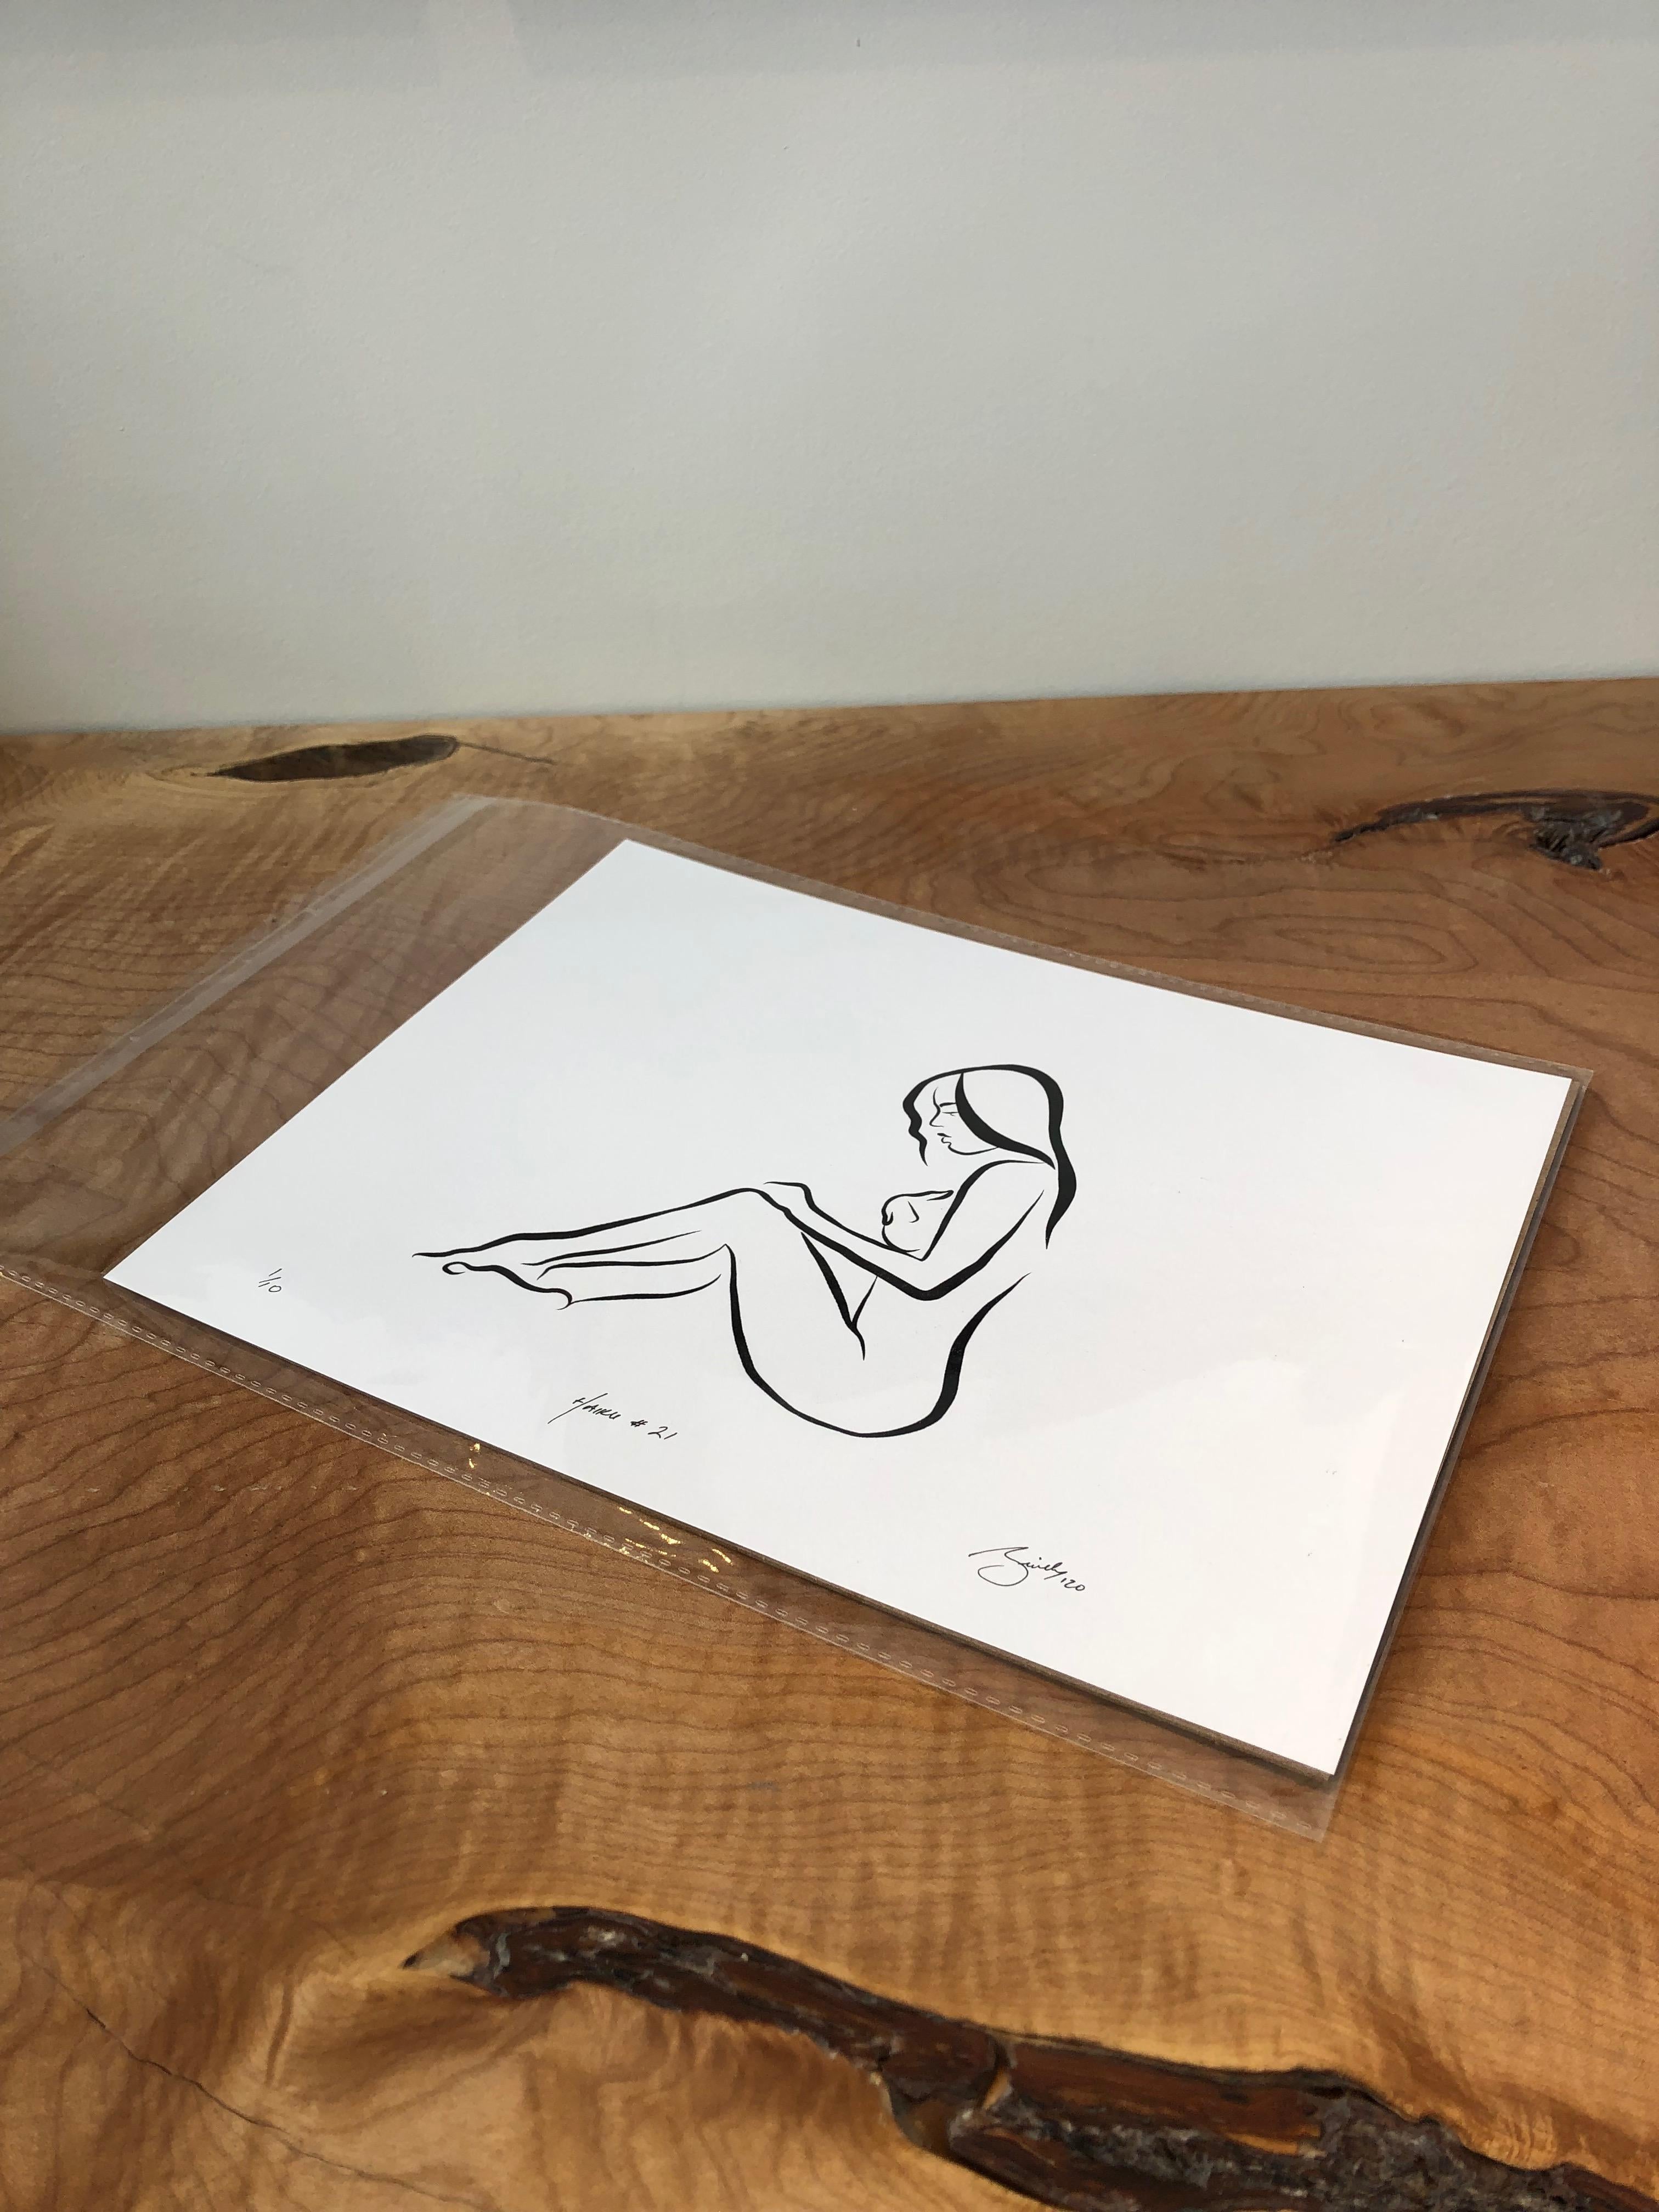 Haiku #21 - 1/50, Digital Vector Drawing Seated Female Nude Woman Figure Cover - Contemporary Art by Michael Binkley